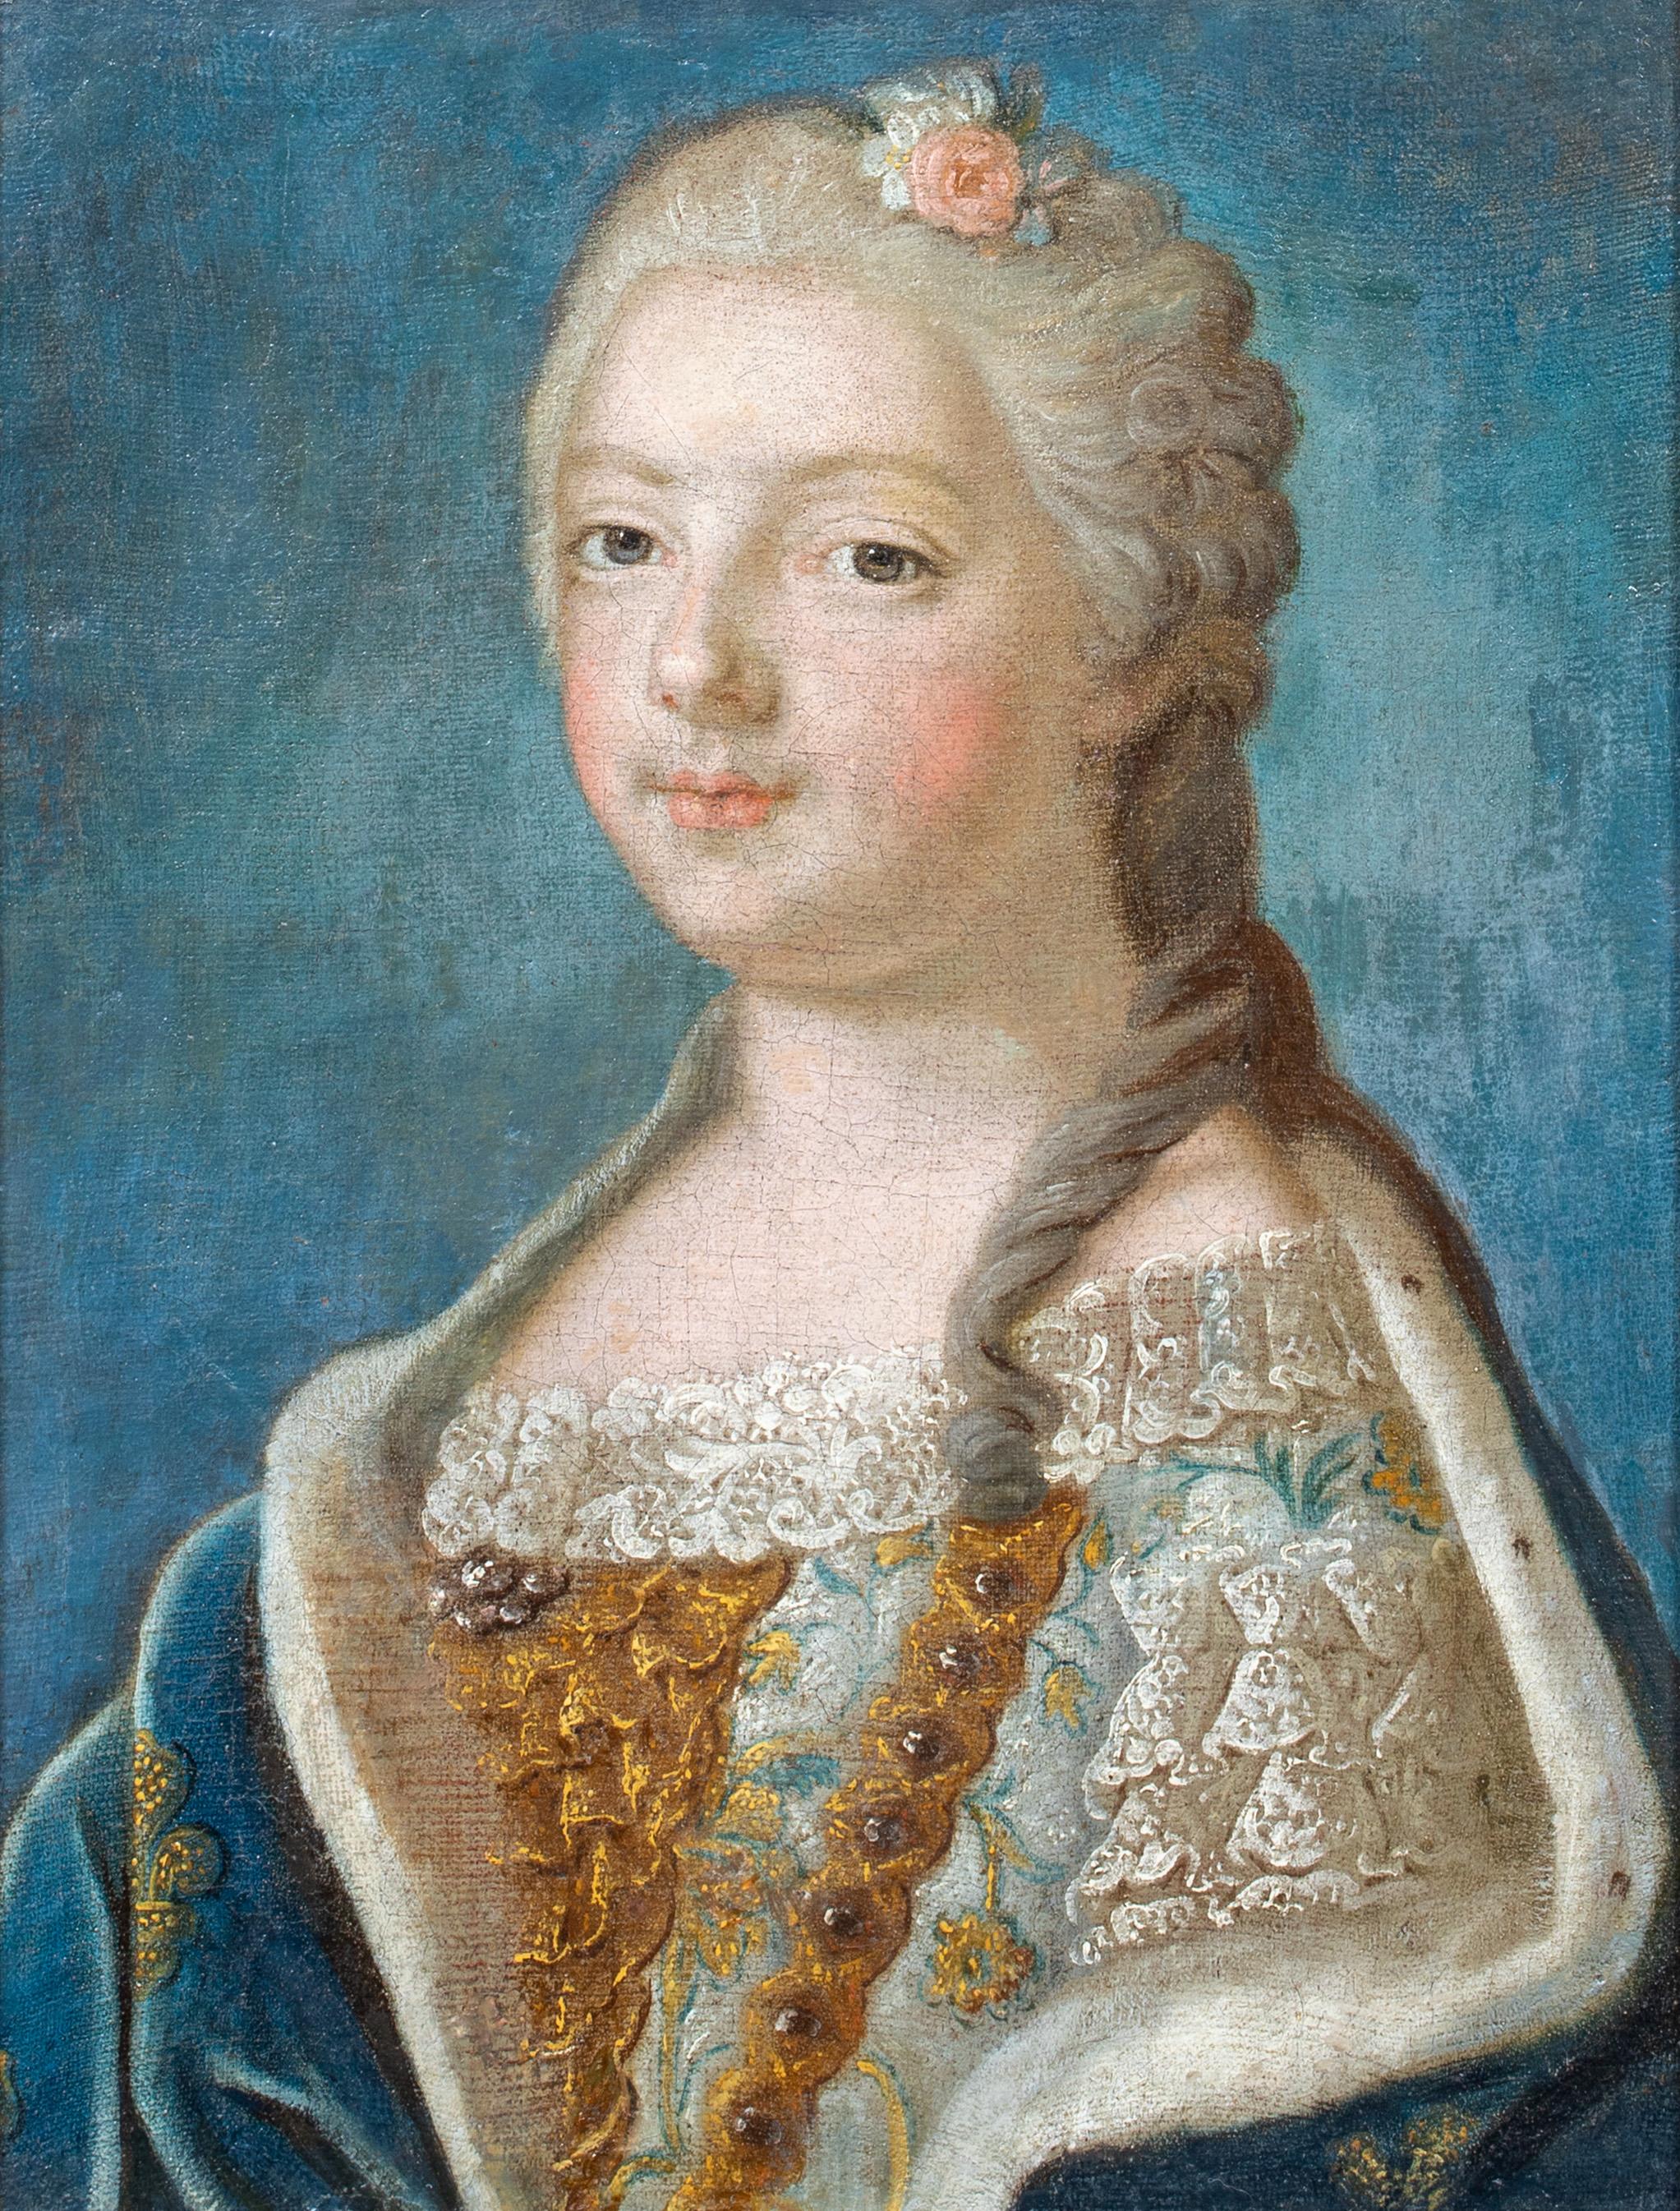 Portrait Of Marie Leszczyńska, Queen Of France (1703-1768), 18th Century - Painting by Jean-Marc Nattier